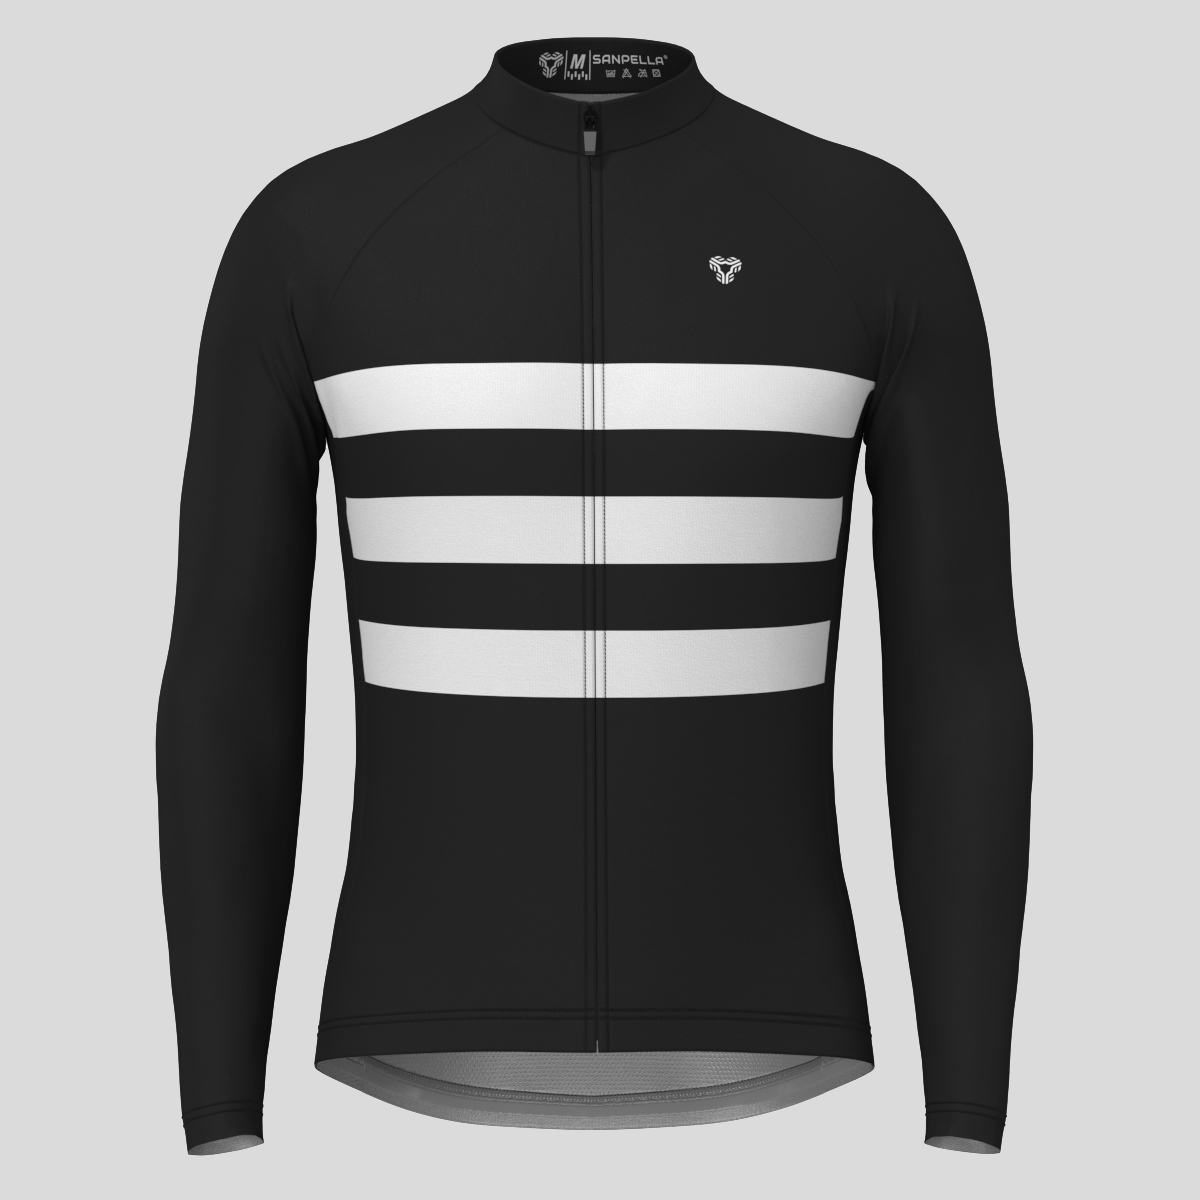 Men's Classic Stripes LS Cycling Jersey - Black/White